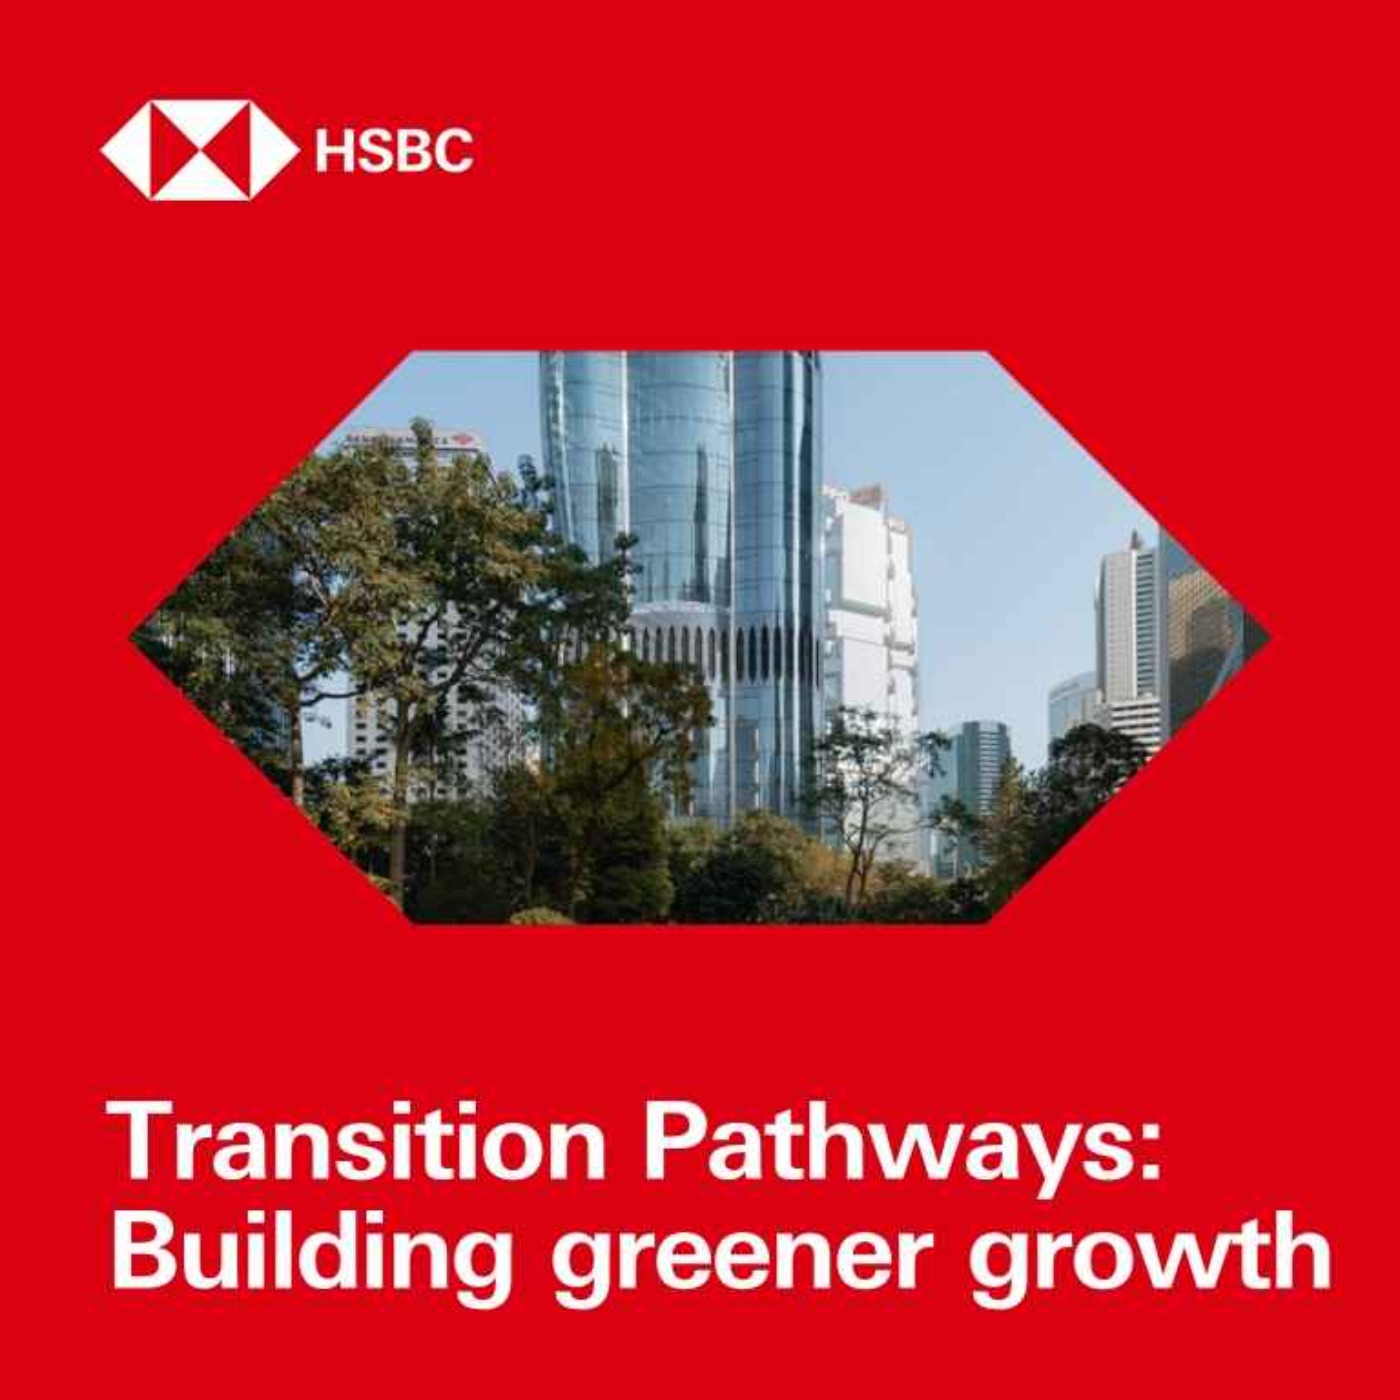 HSBC Transition Pathways: Building greener growth